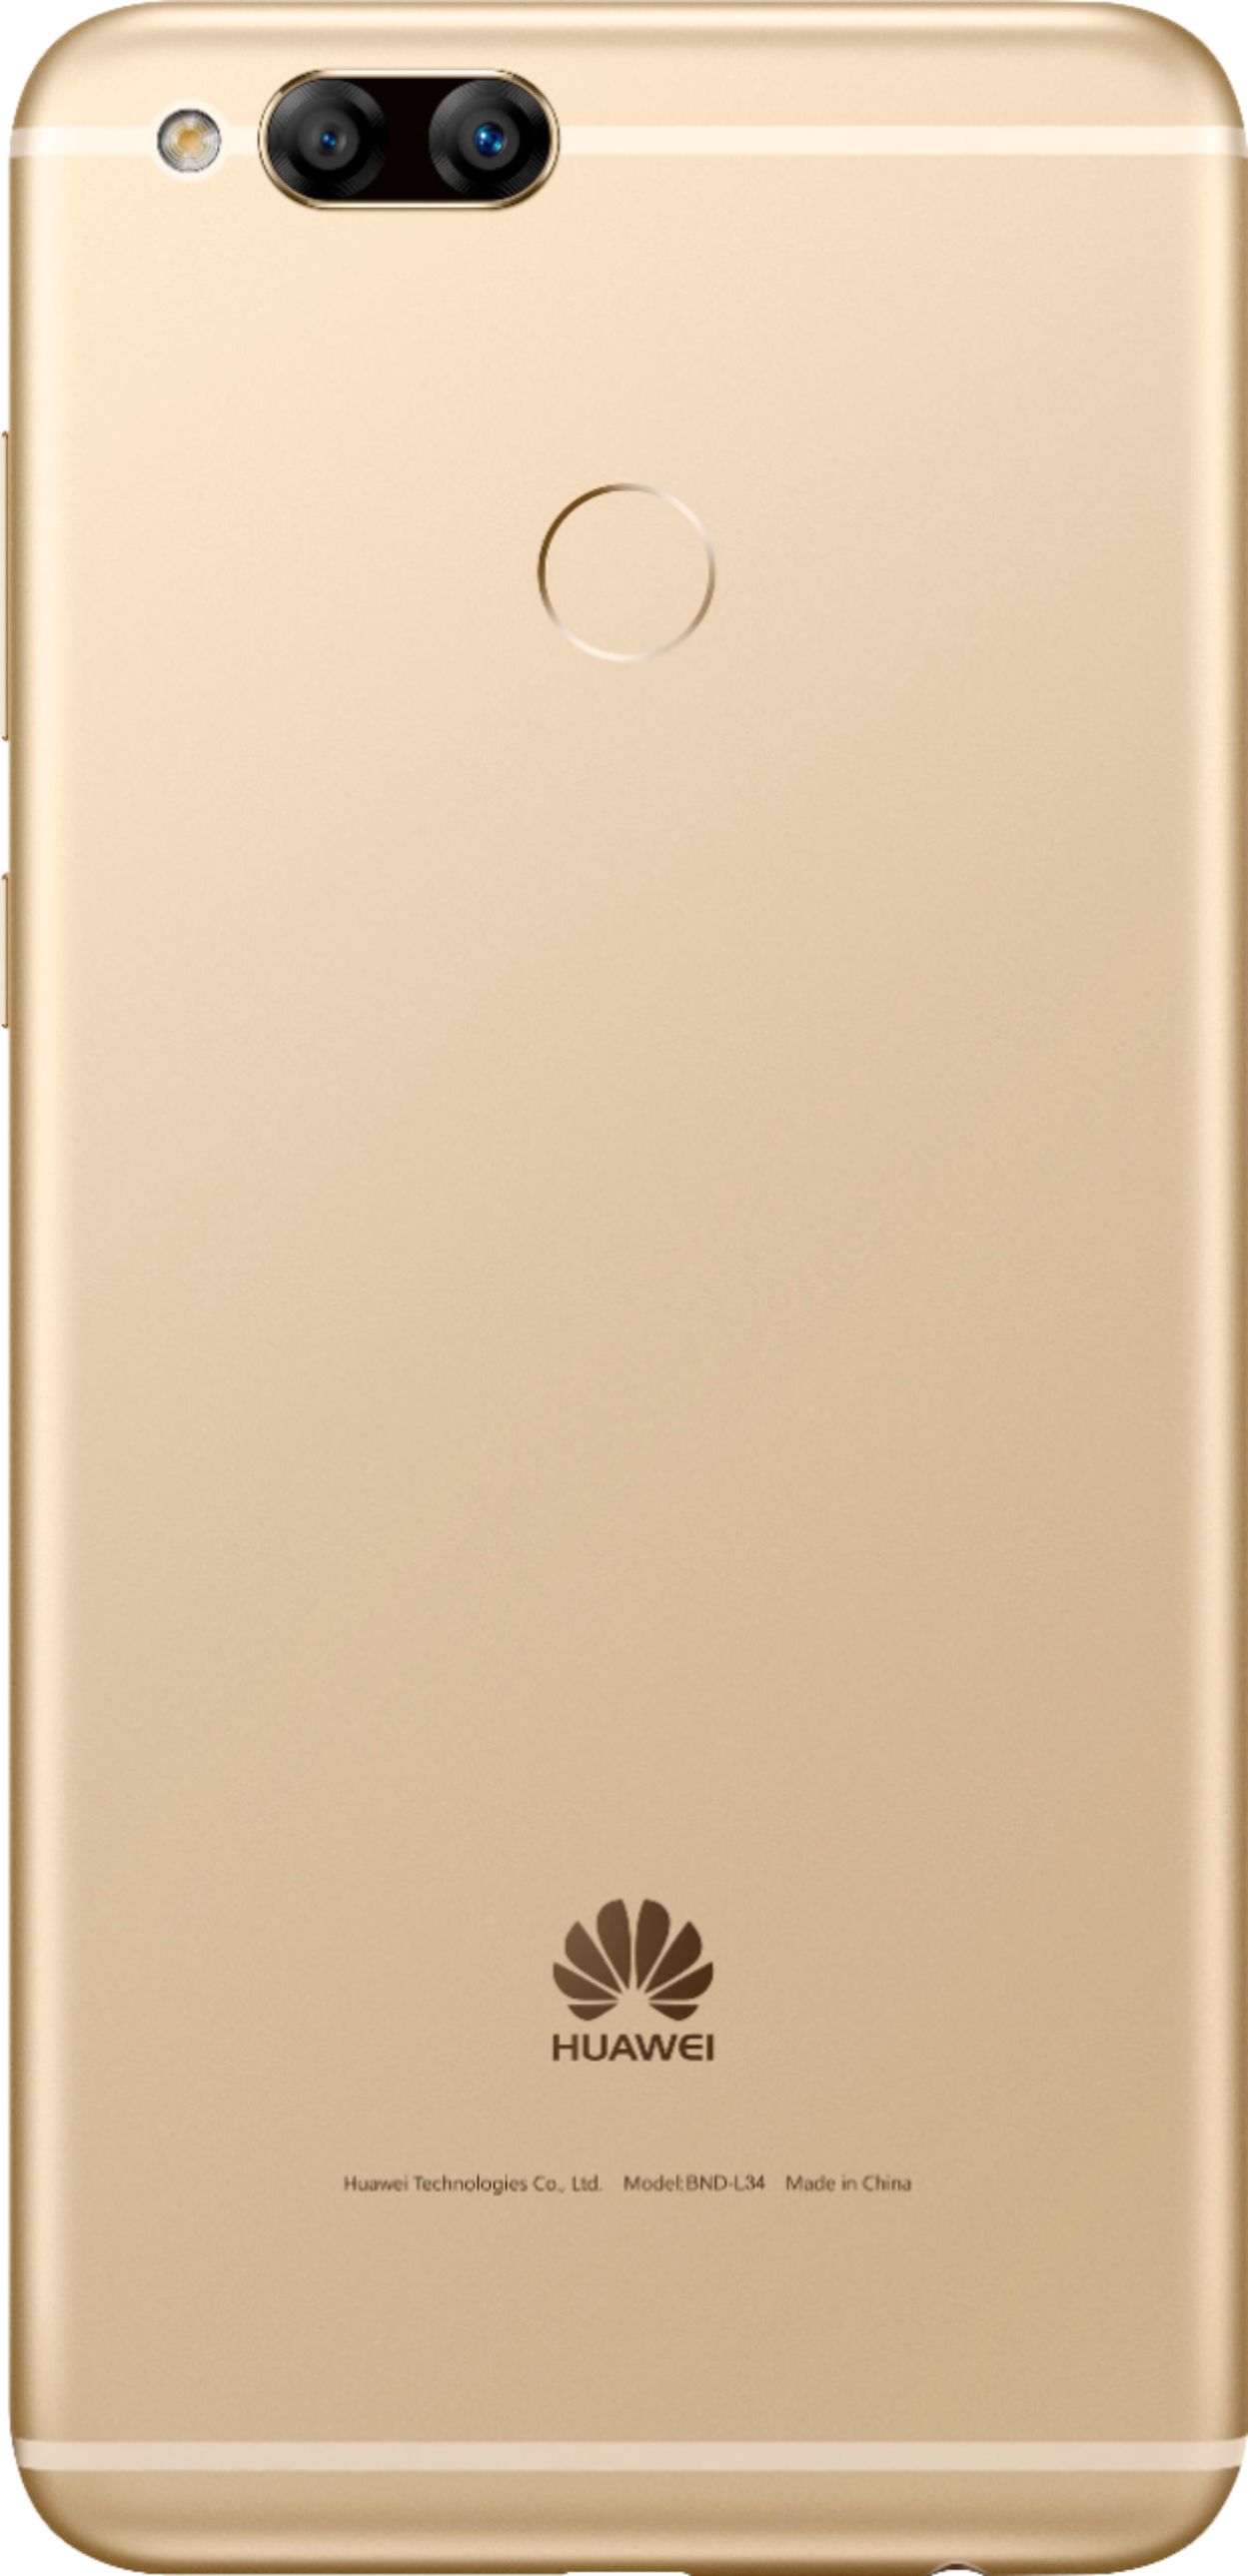 erklære vidnesbyrd quagga Best Buy: Huawei Mate SE 4G LTE with 64GB Memory Cell Phone (Unlocked) Gold  BOND-L34C